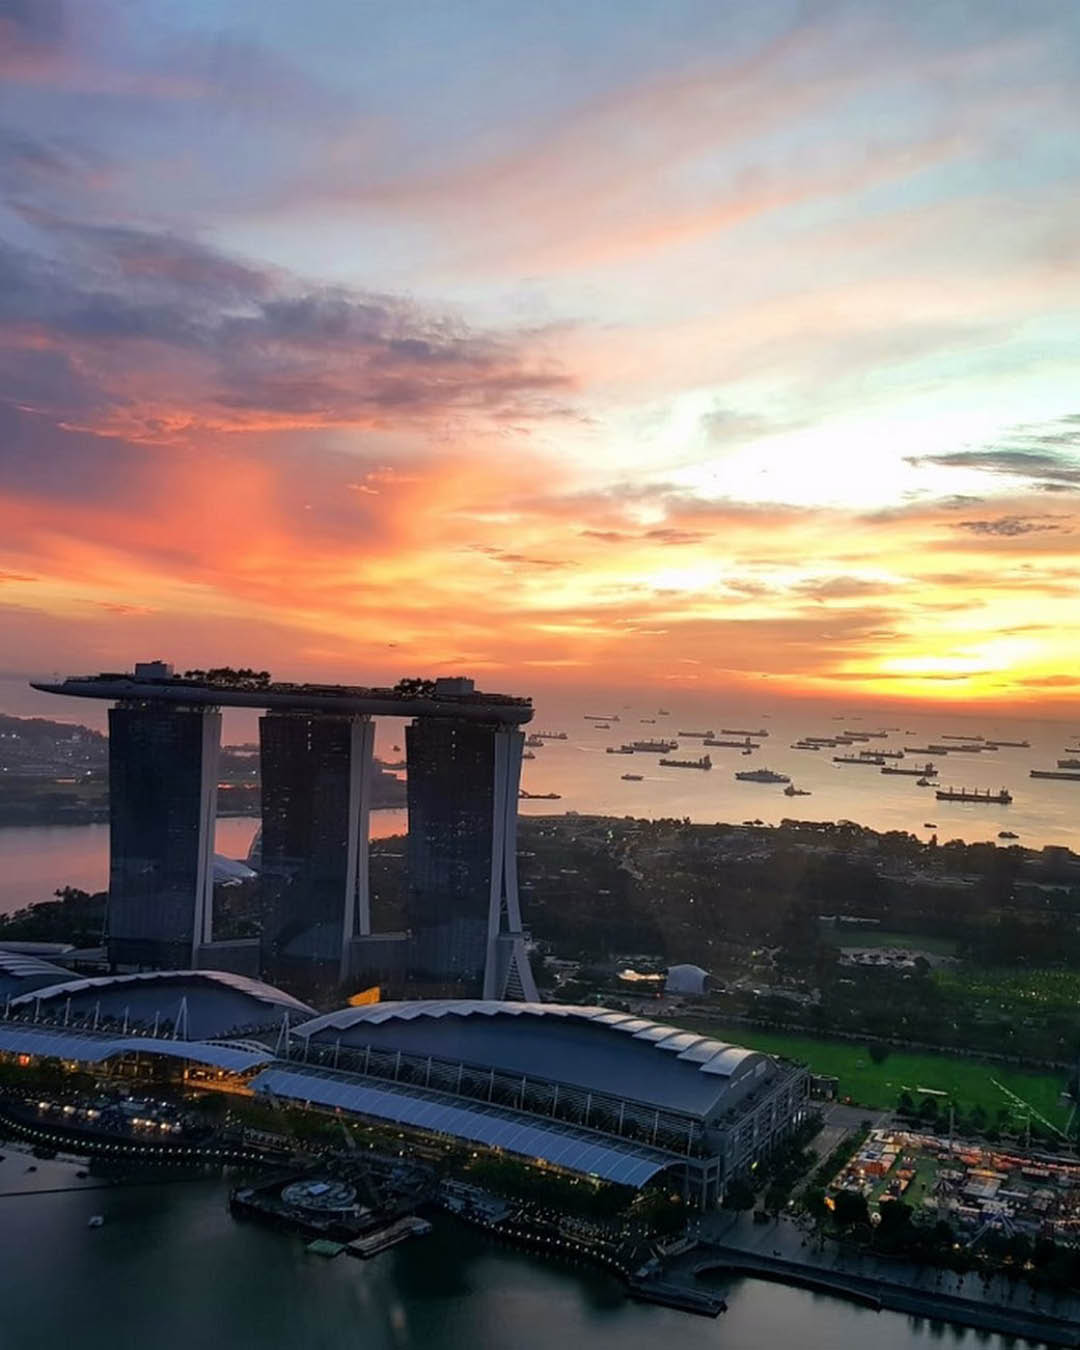 Sunset views of the CBD from Altro Zafferano, Singapore.